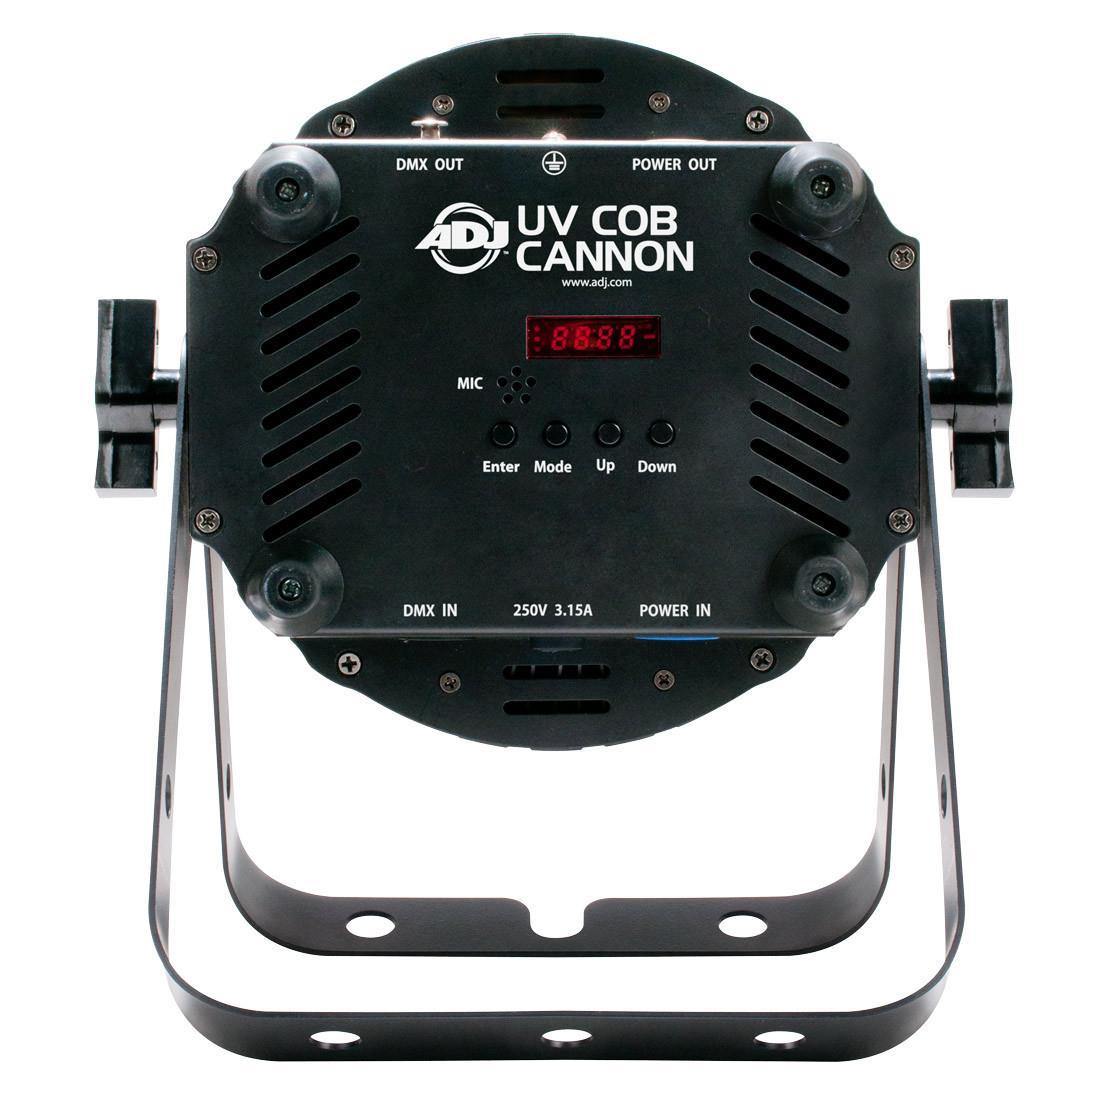 ADJ UV COB Cannon - DY Pro Audio